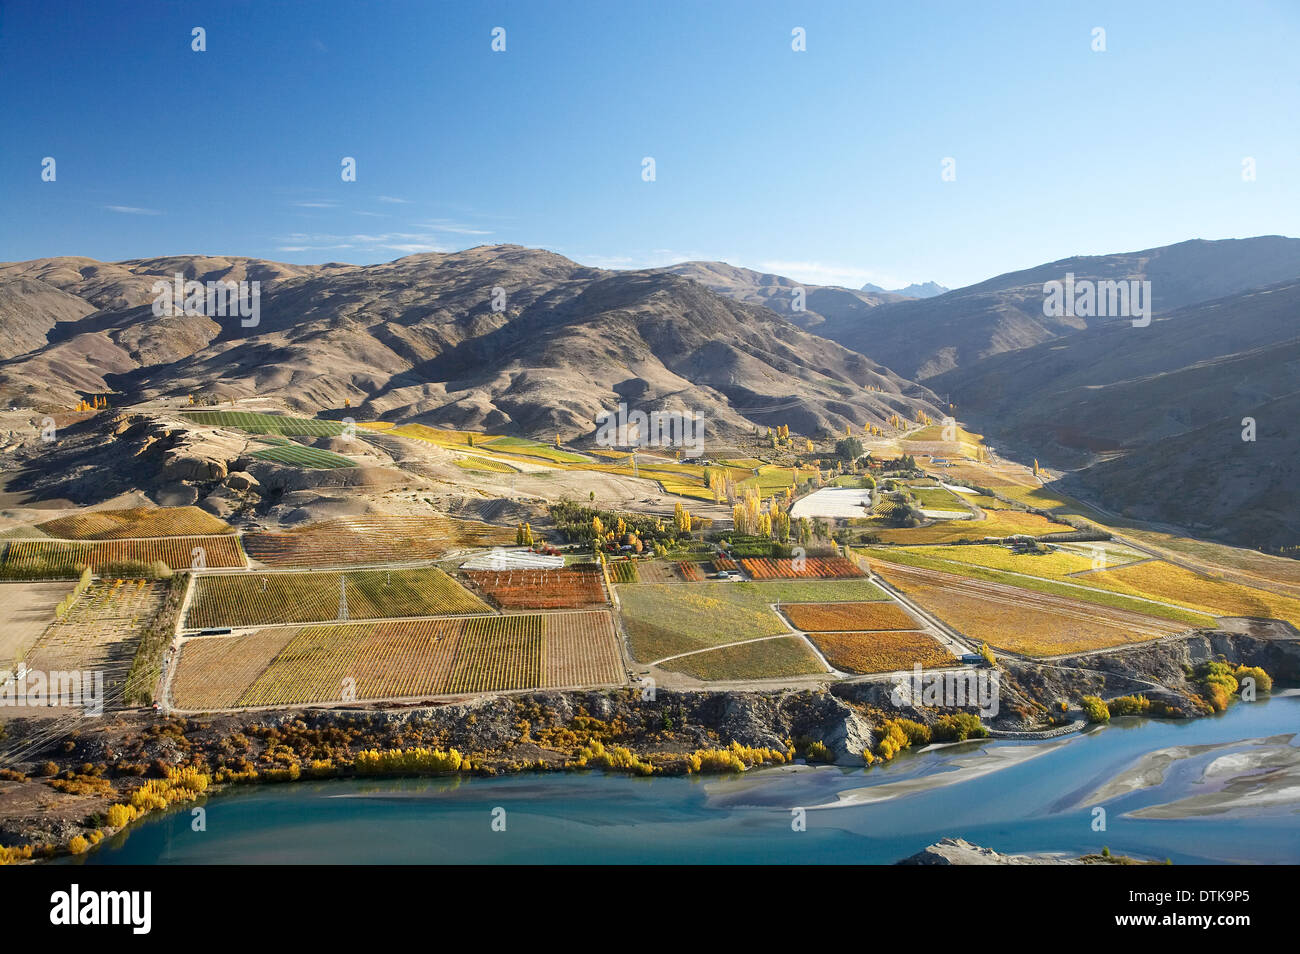 Lake Dunstan, Weinberge und Carrick Range, Bannockburn, Central Otago, Südinsel, Neuseeland - Antenne Stockfoto